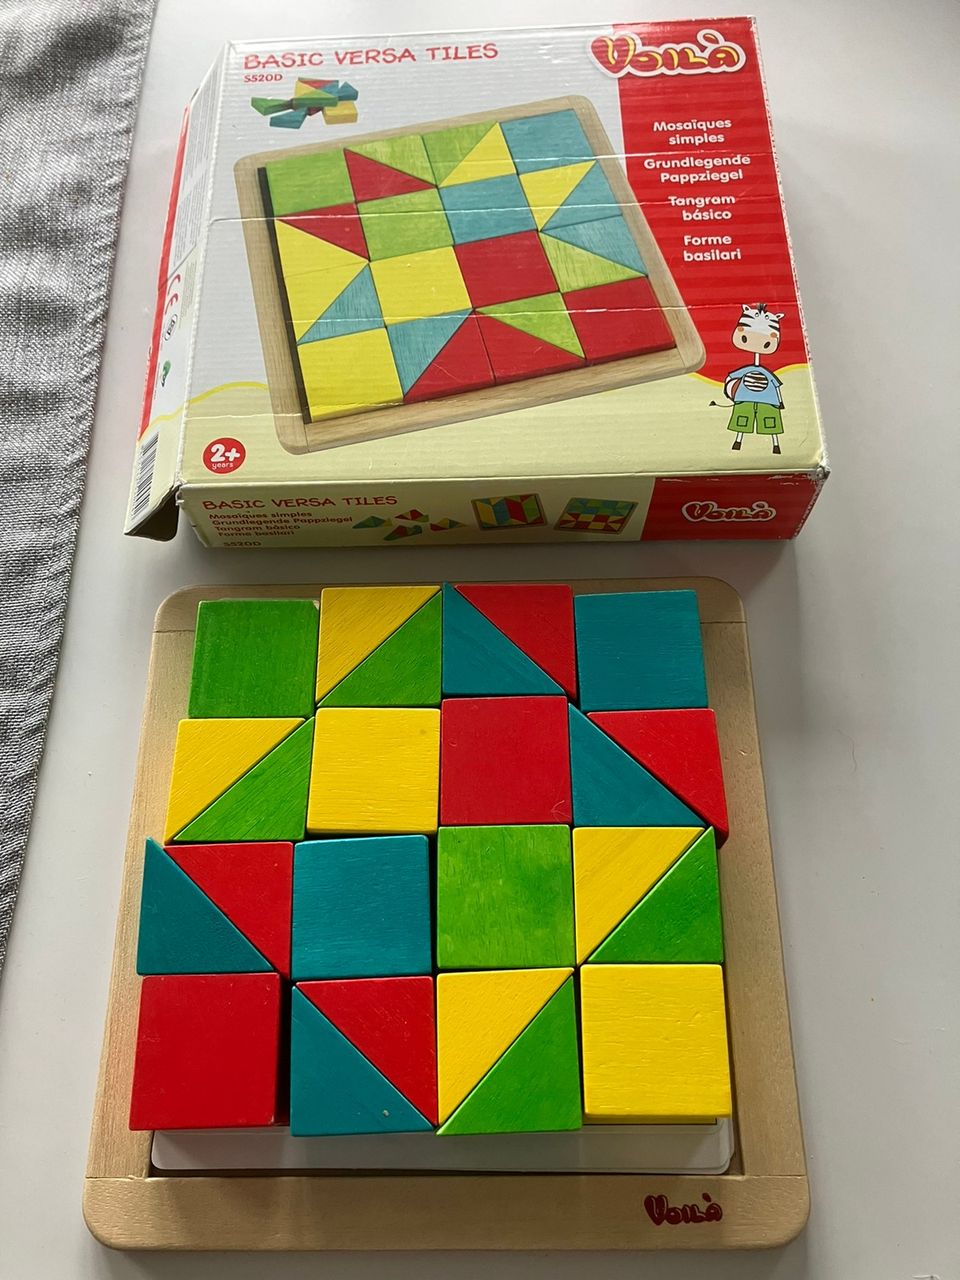 Voila puinen tangrammi-peli